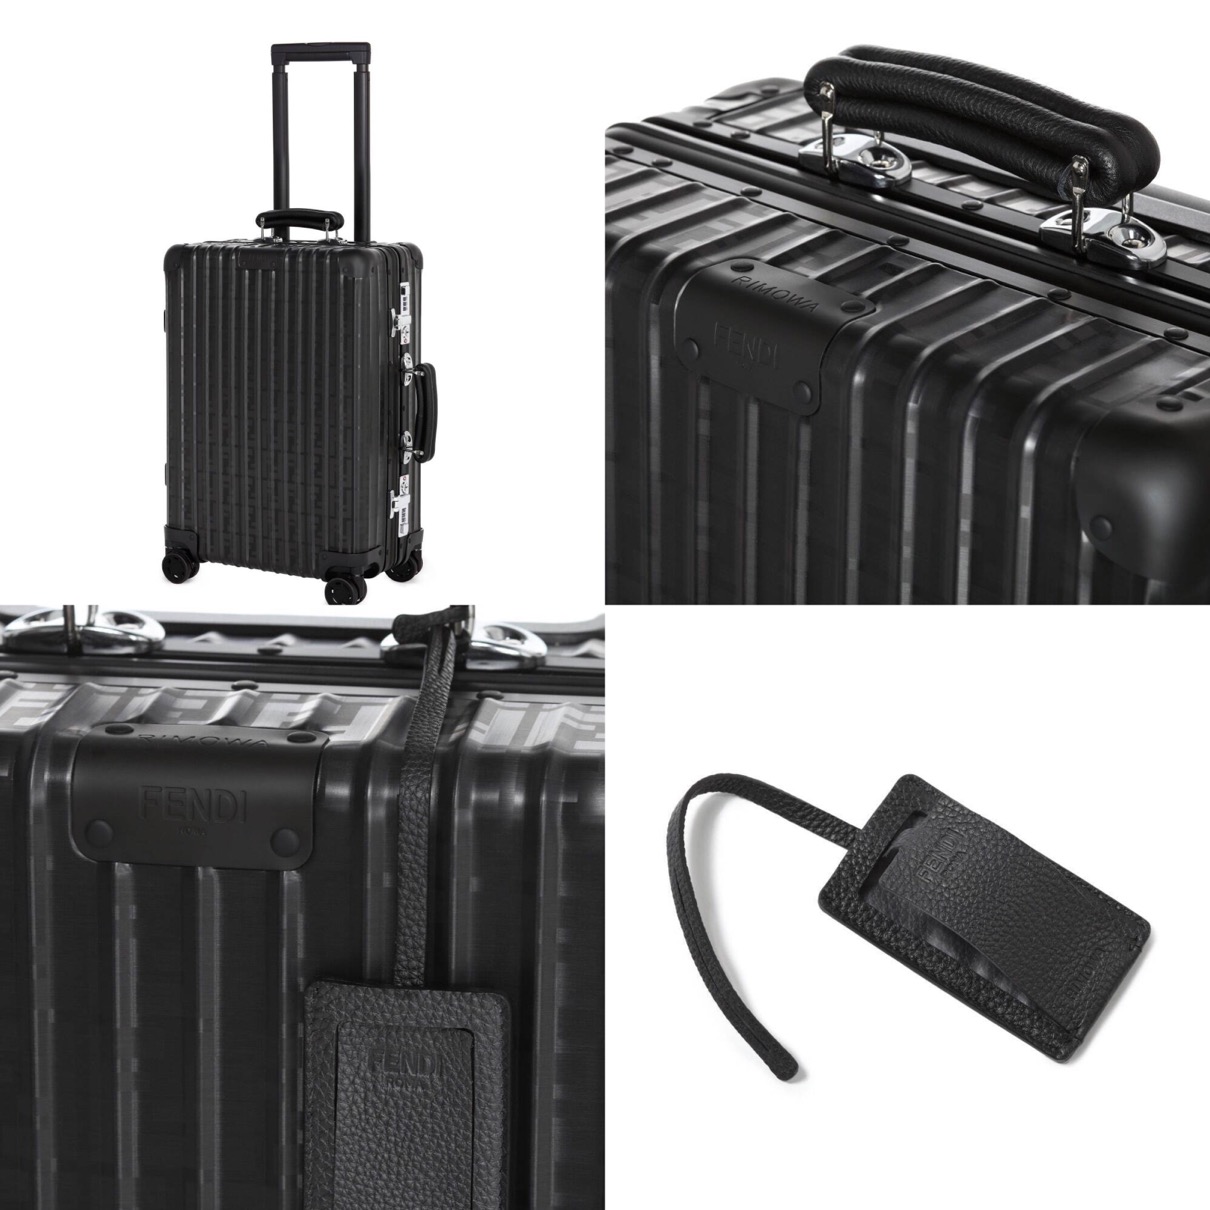 FENDI × RIMOWA】コラボスーツケースのオンライン販売が開始。一部直営店では2021年9月より発売予定 | UP TO DATE